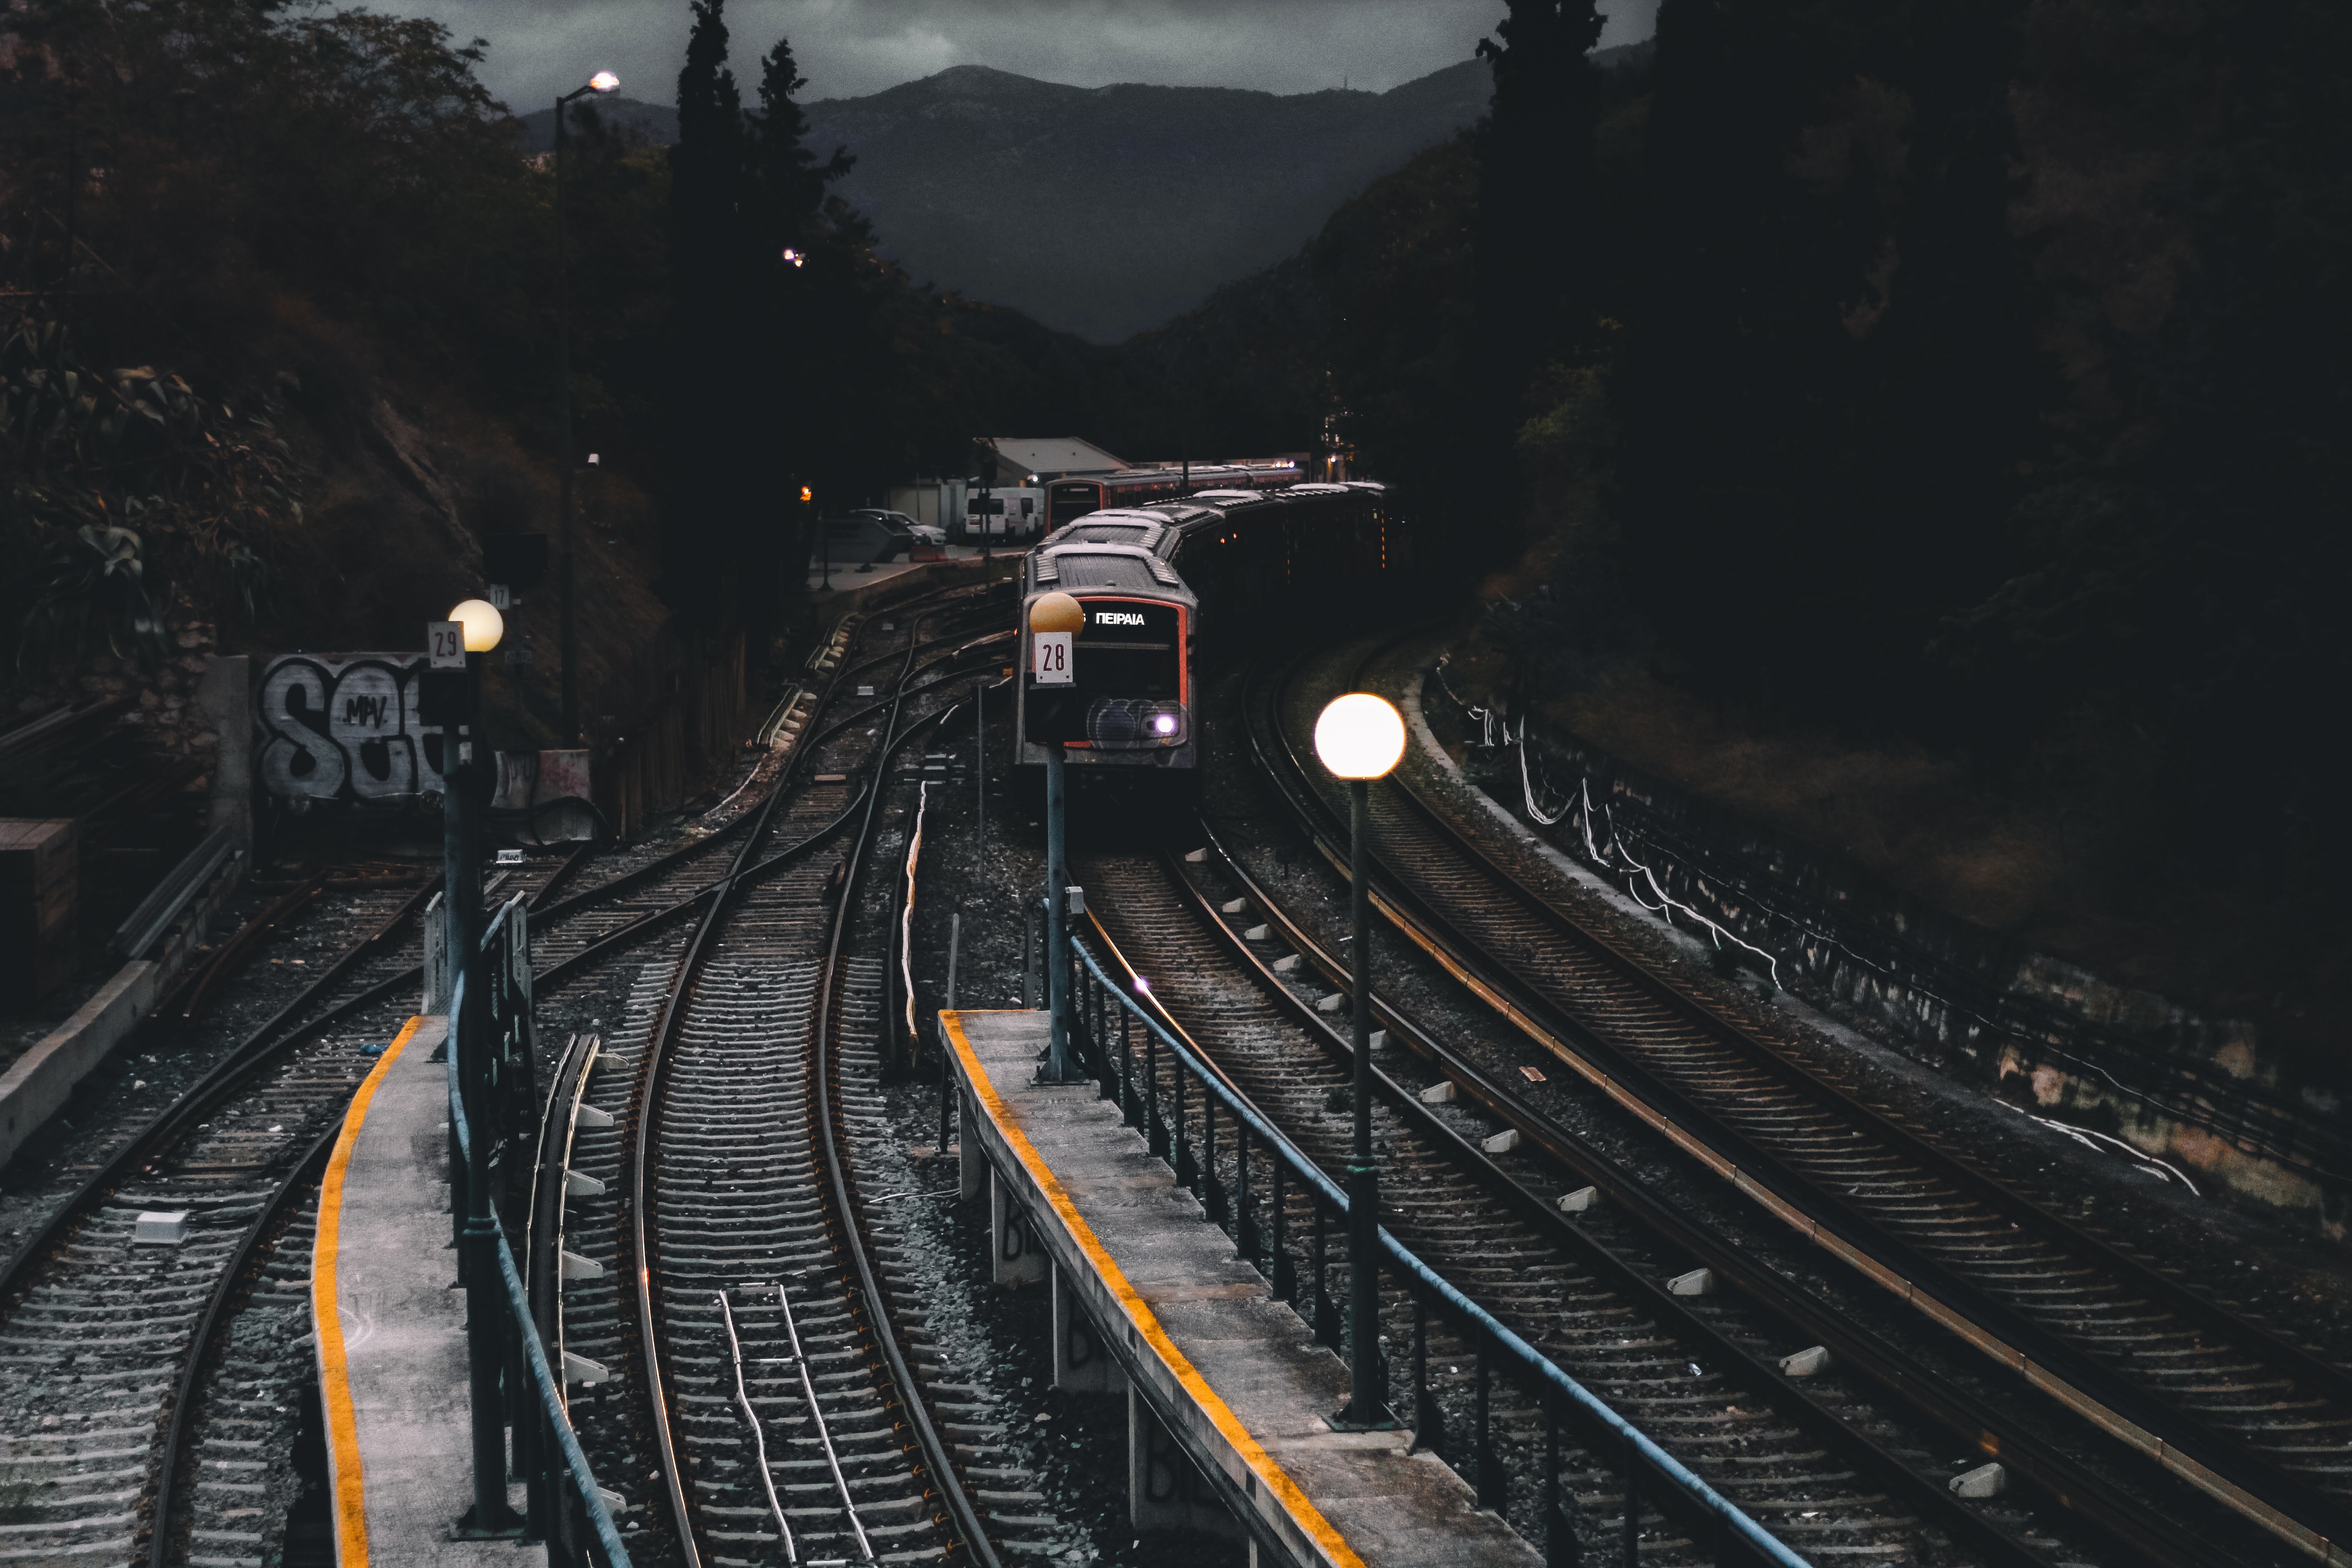 Train on railways during nighttime photo